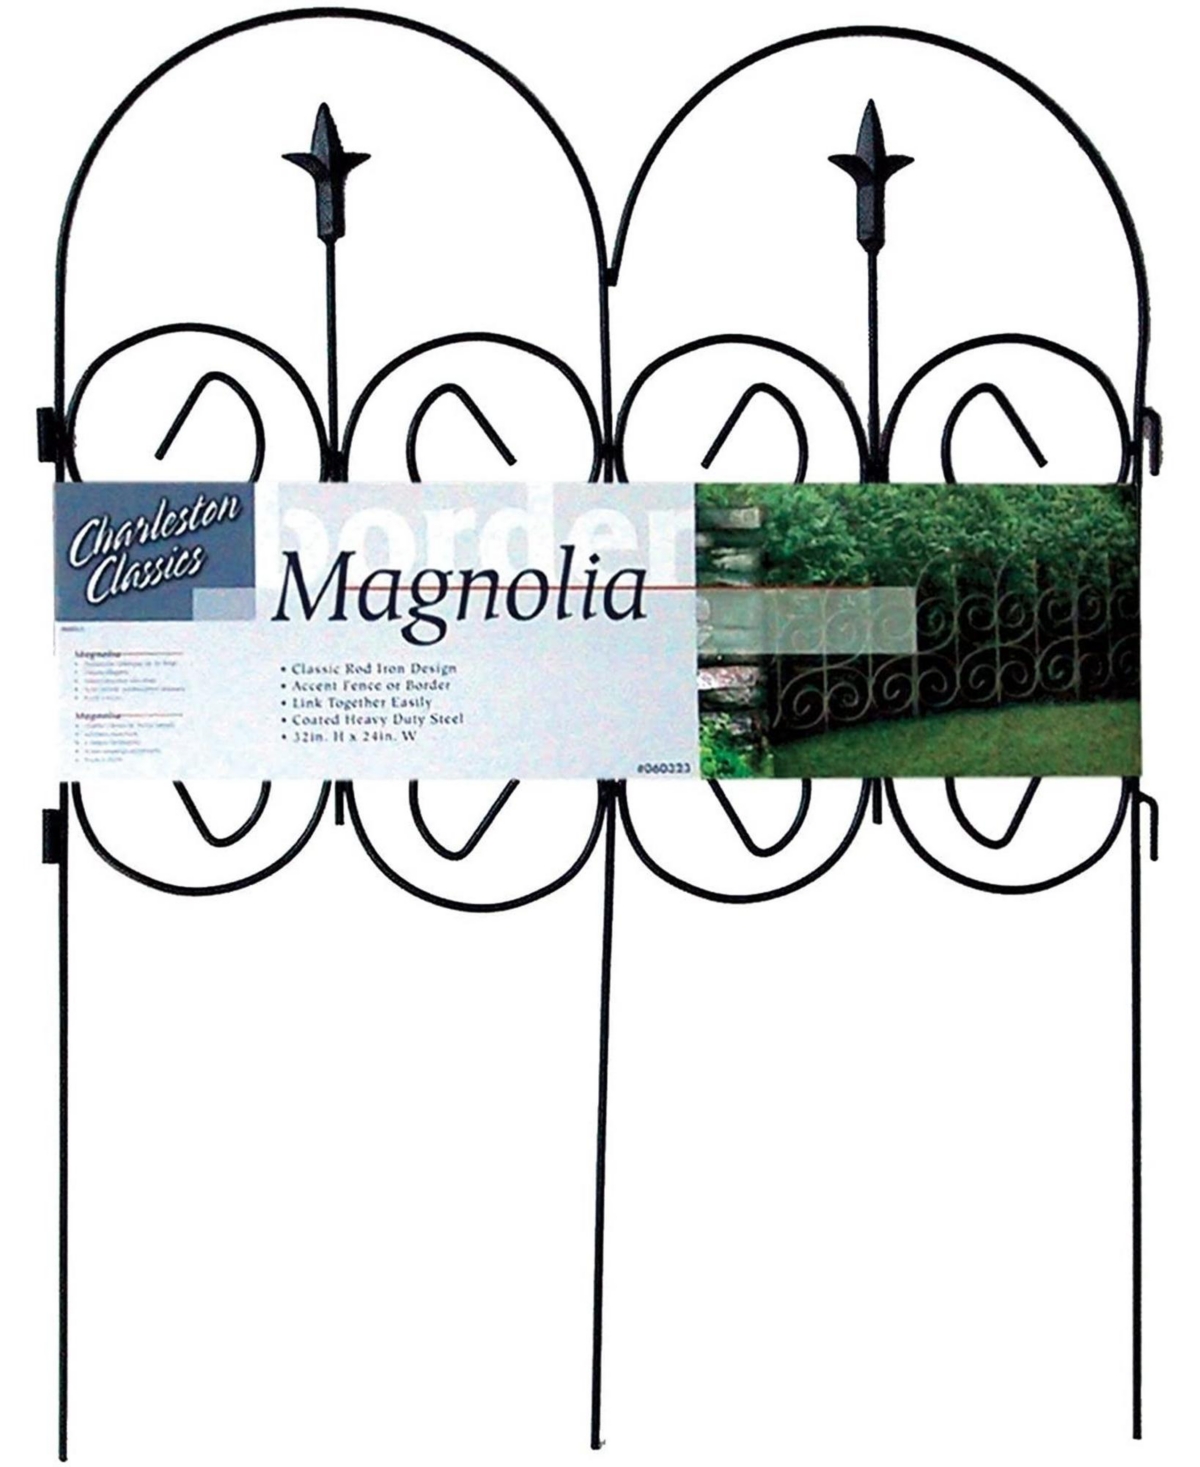 Magnolia Decorative Steel Landscape Border Fence Section - Black